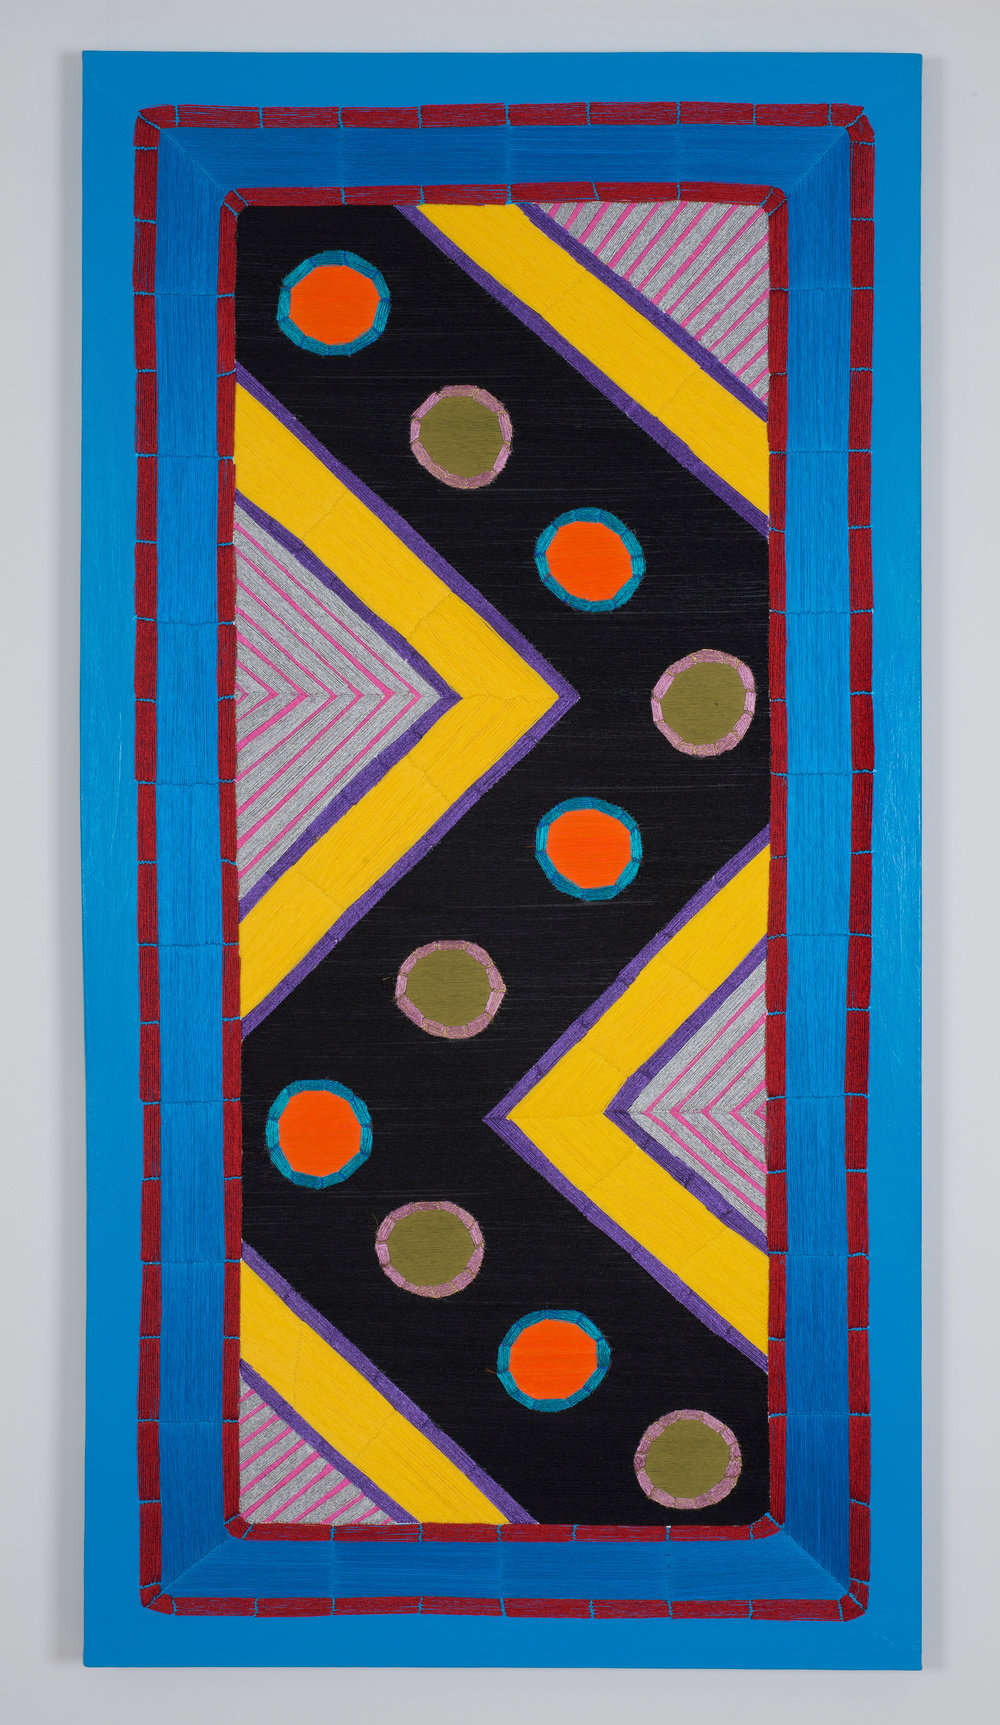 Cox, detuning zig zag zig, 2013, needle and thread, acrylic on canvas, 60 x 30 in. 152.4 x 76.2 cm, non 53.802